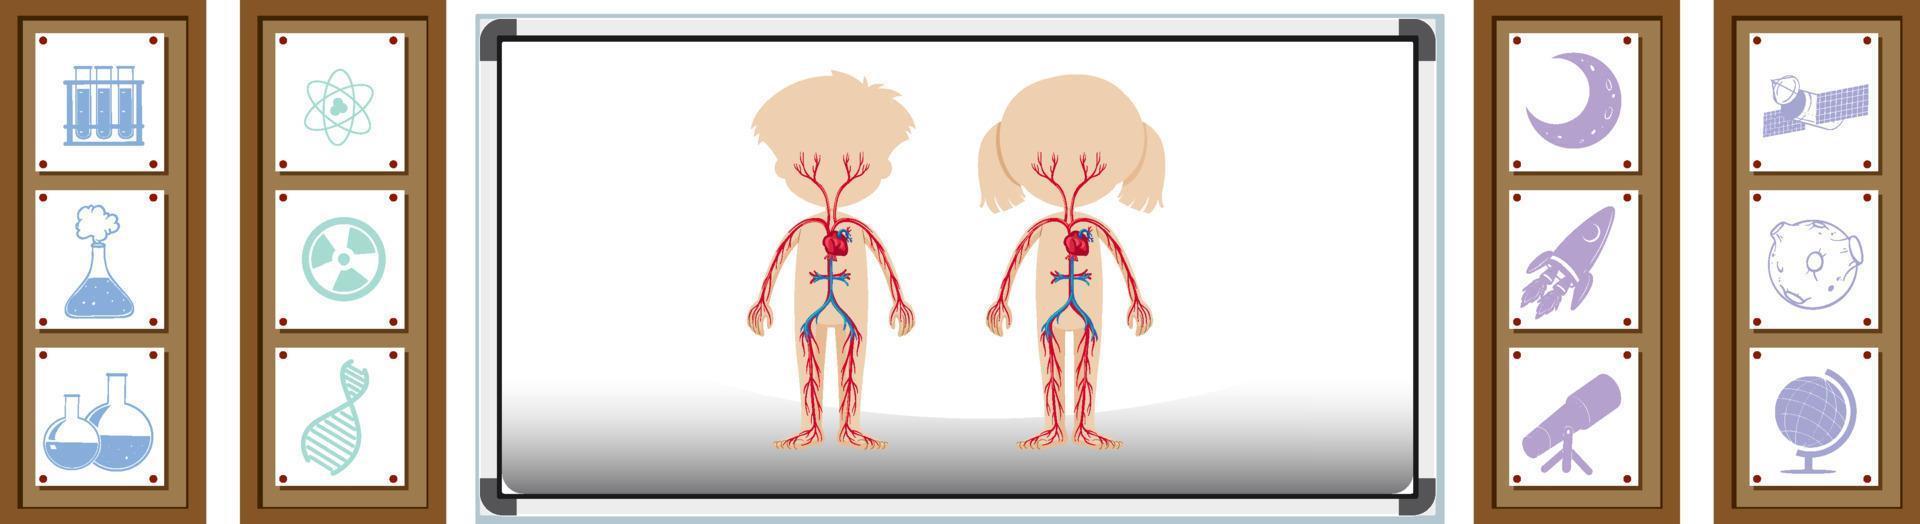 tavola che mostra l'anatomia umana vettore